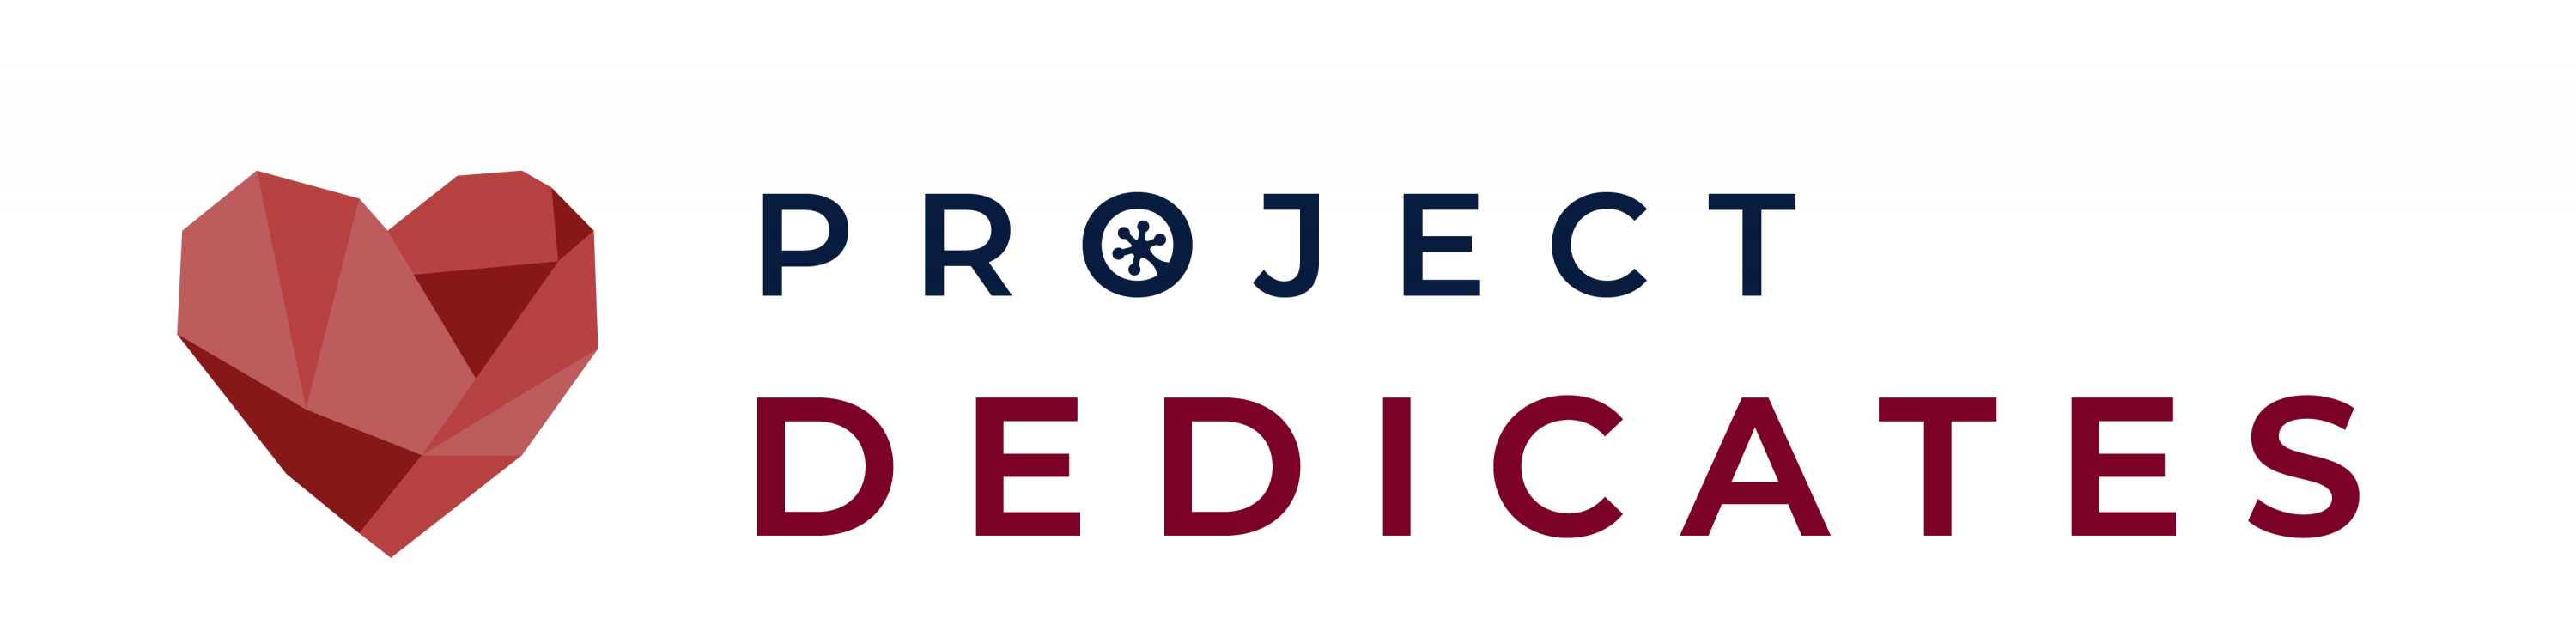 project-dedicates-logo-01